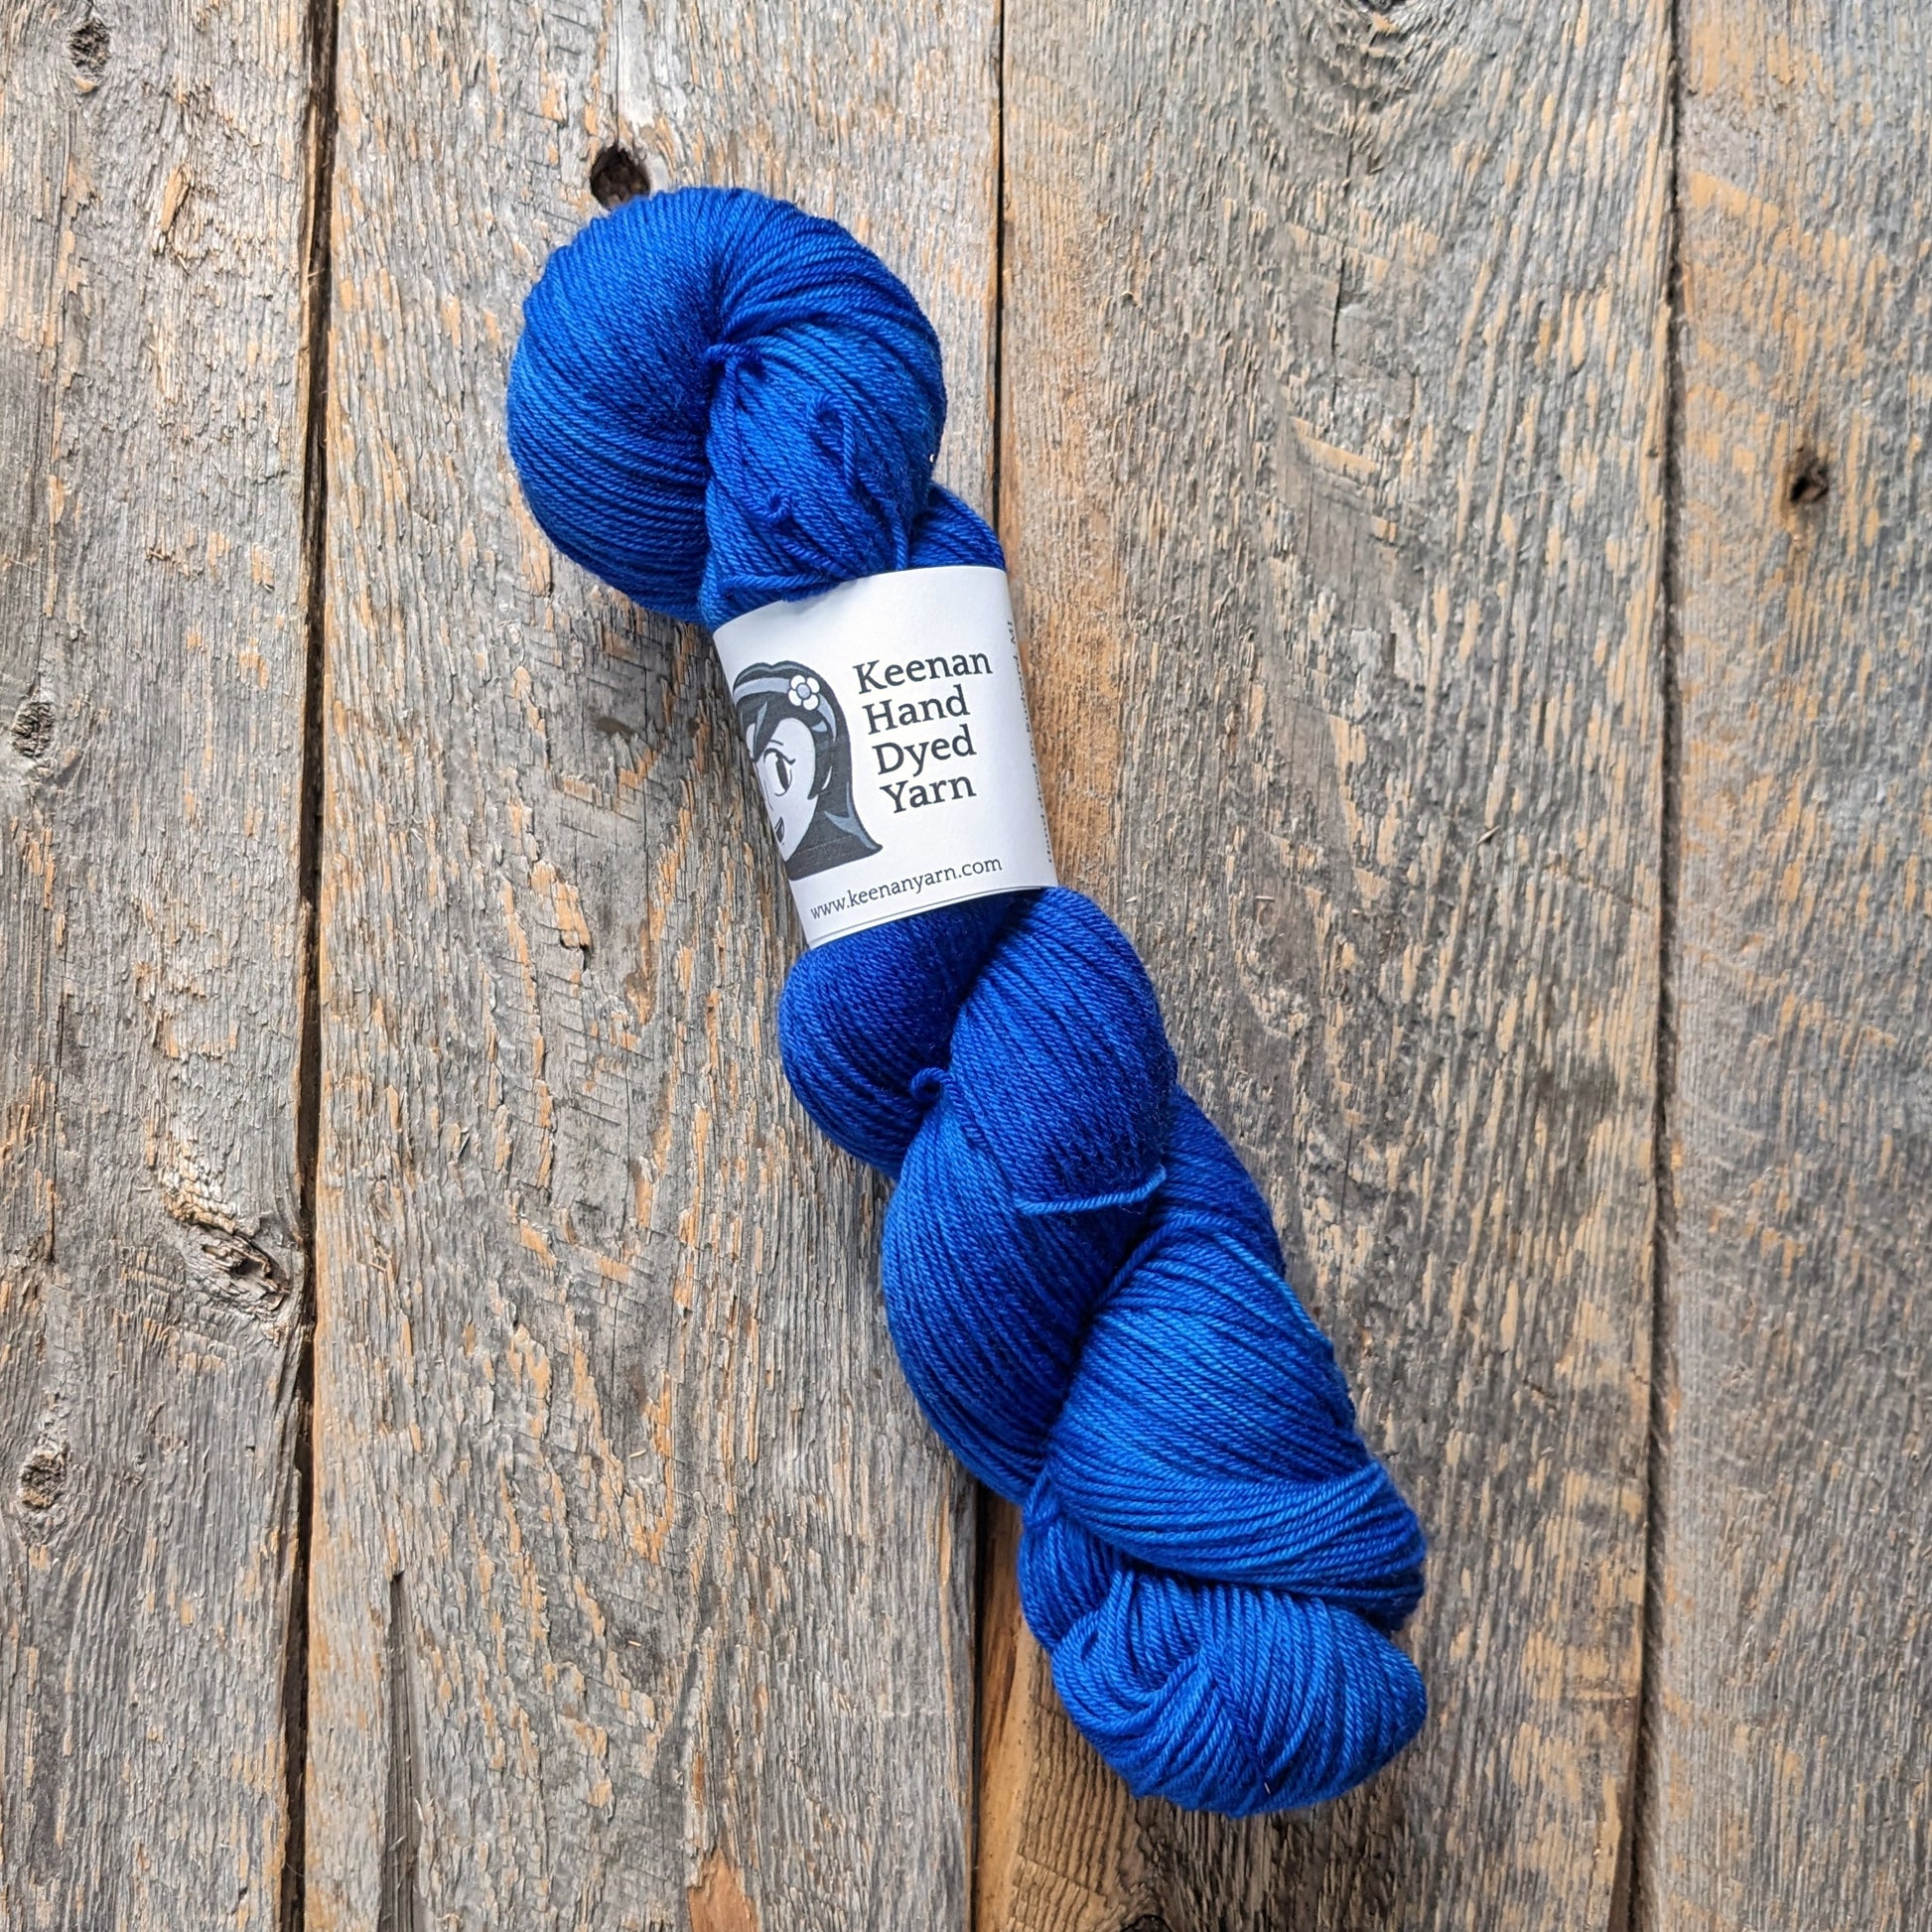 royal blue, sock yarn, twisted skein, blue hand dyed yarn, merino nylon yarn, Keenan hand dyed